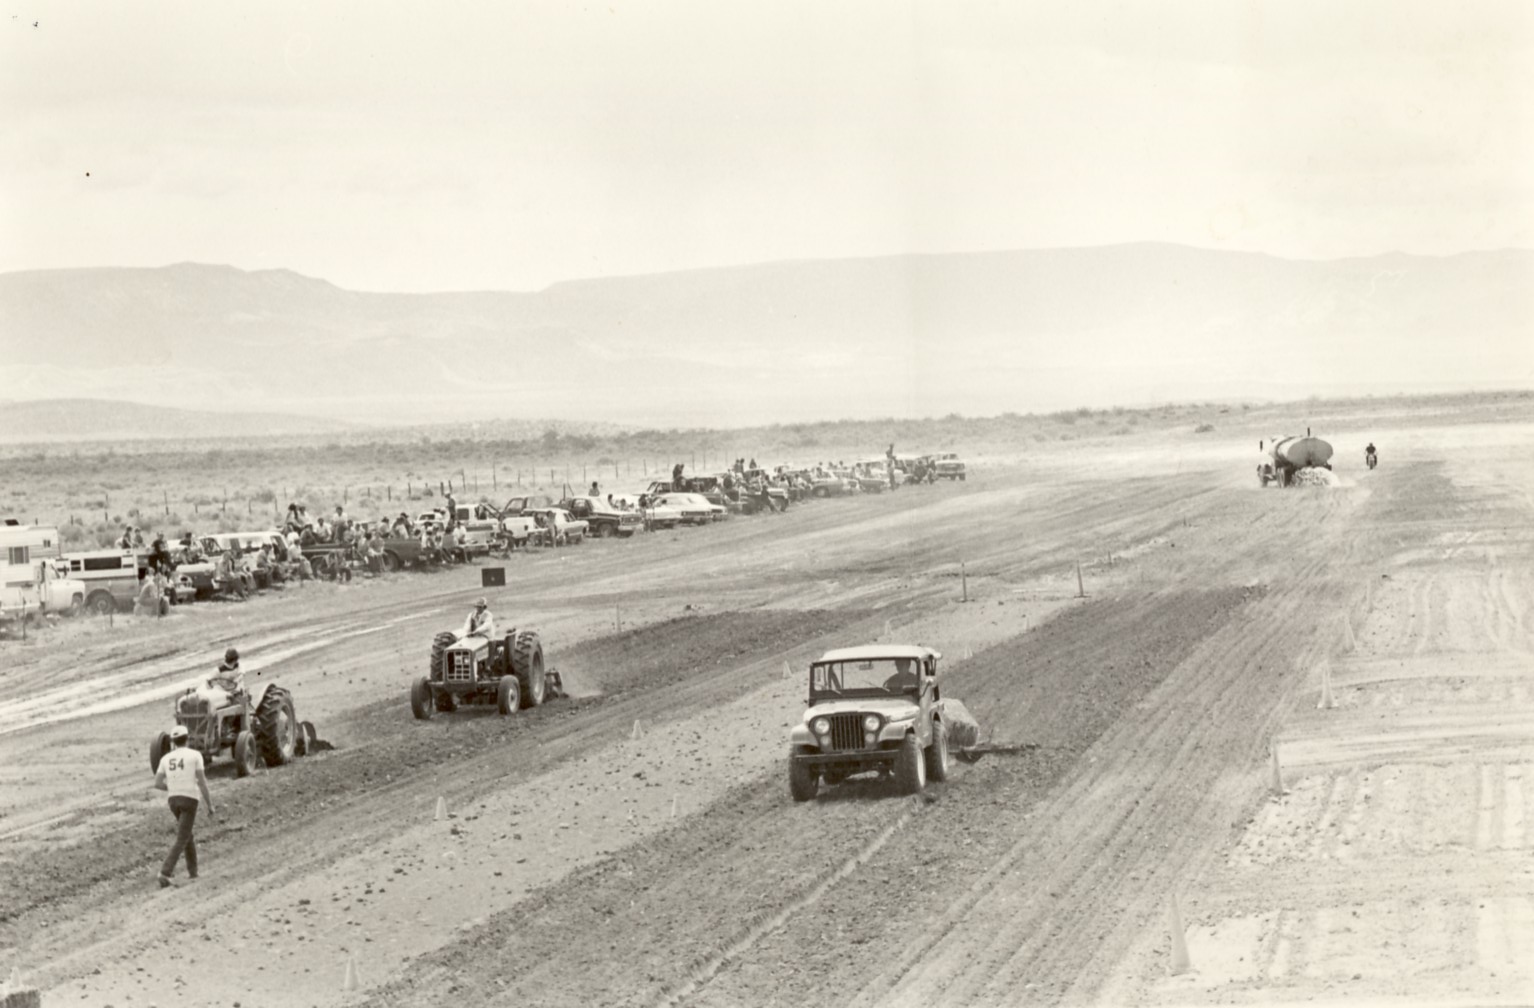 Sand drag racing at the old Dixie Raceway Drag Strip